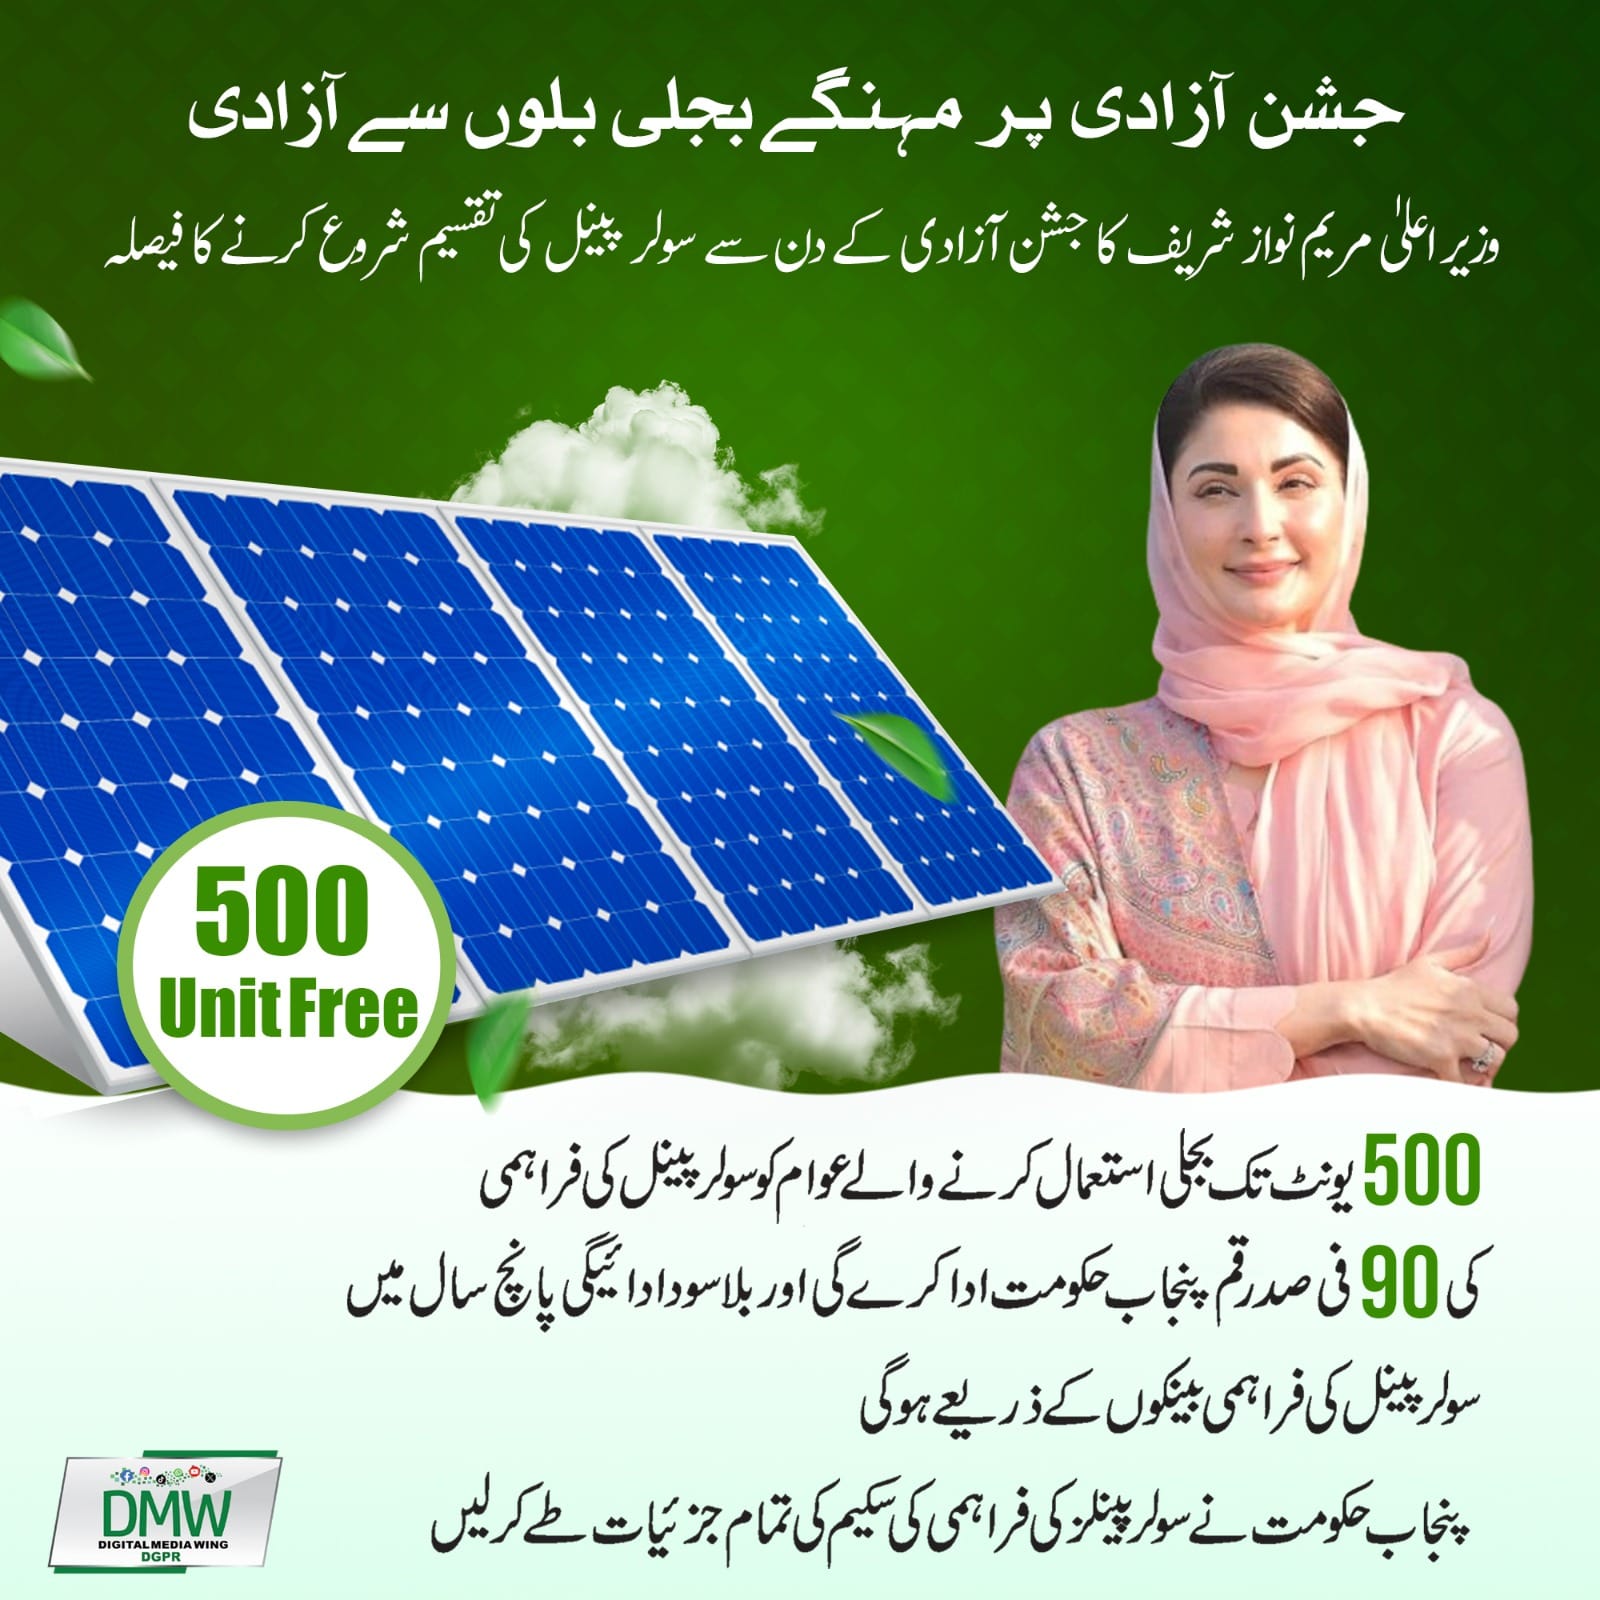 Punjab Solar Scheme upto 500 Units Users